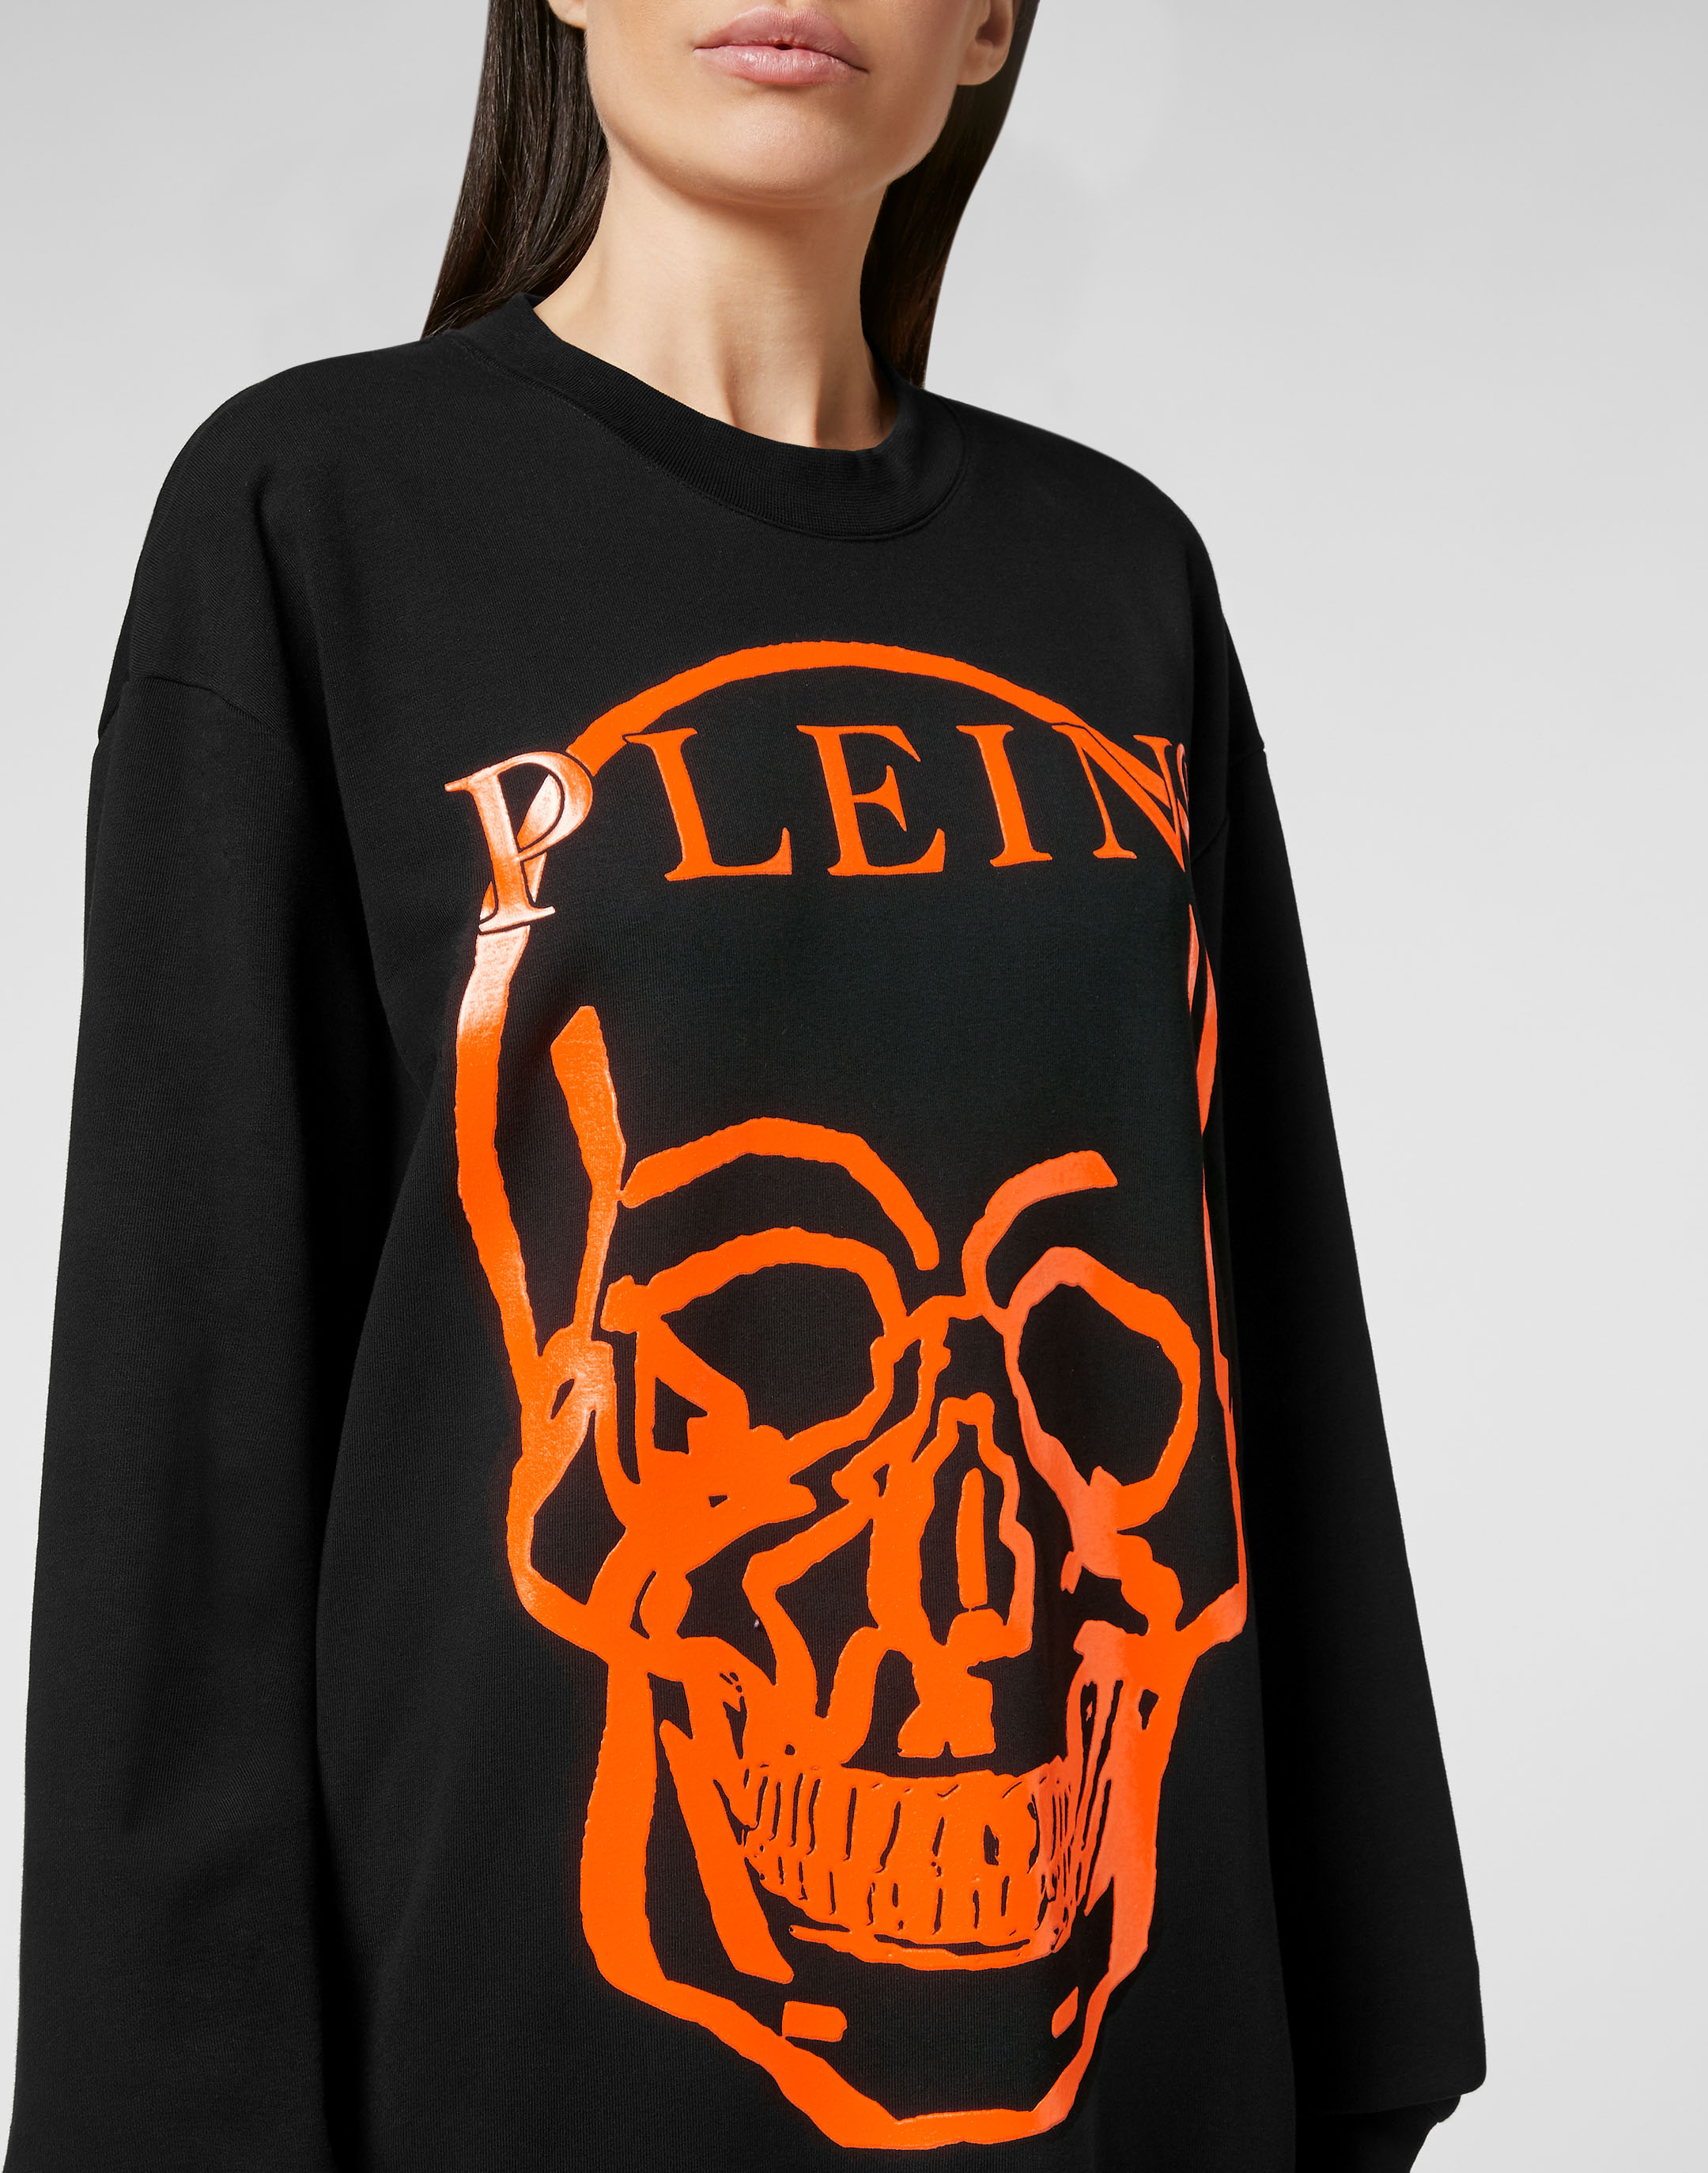 Sweatshirt LS Skull and Plein | Philipp Plein Outlet